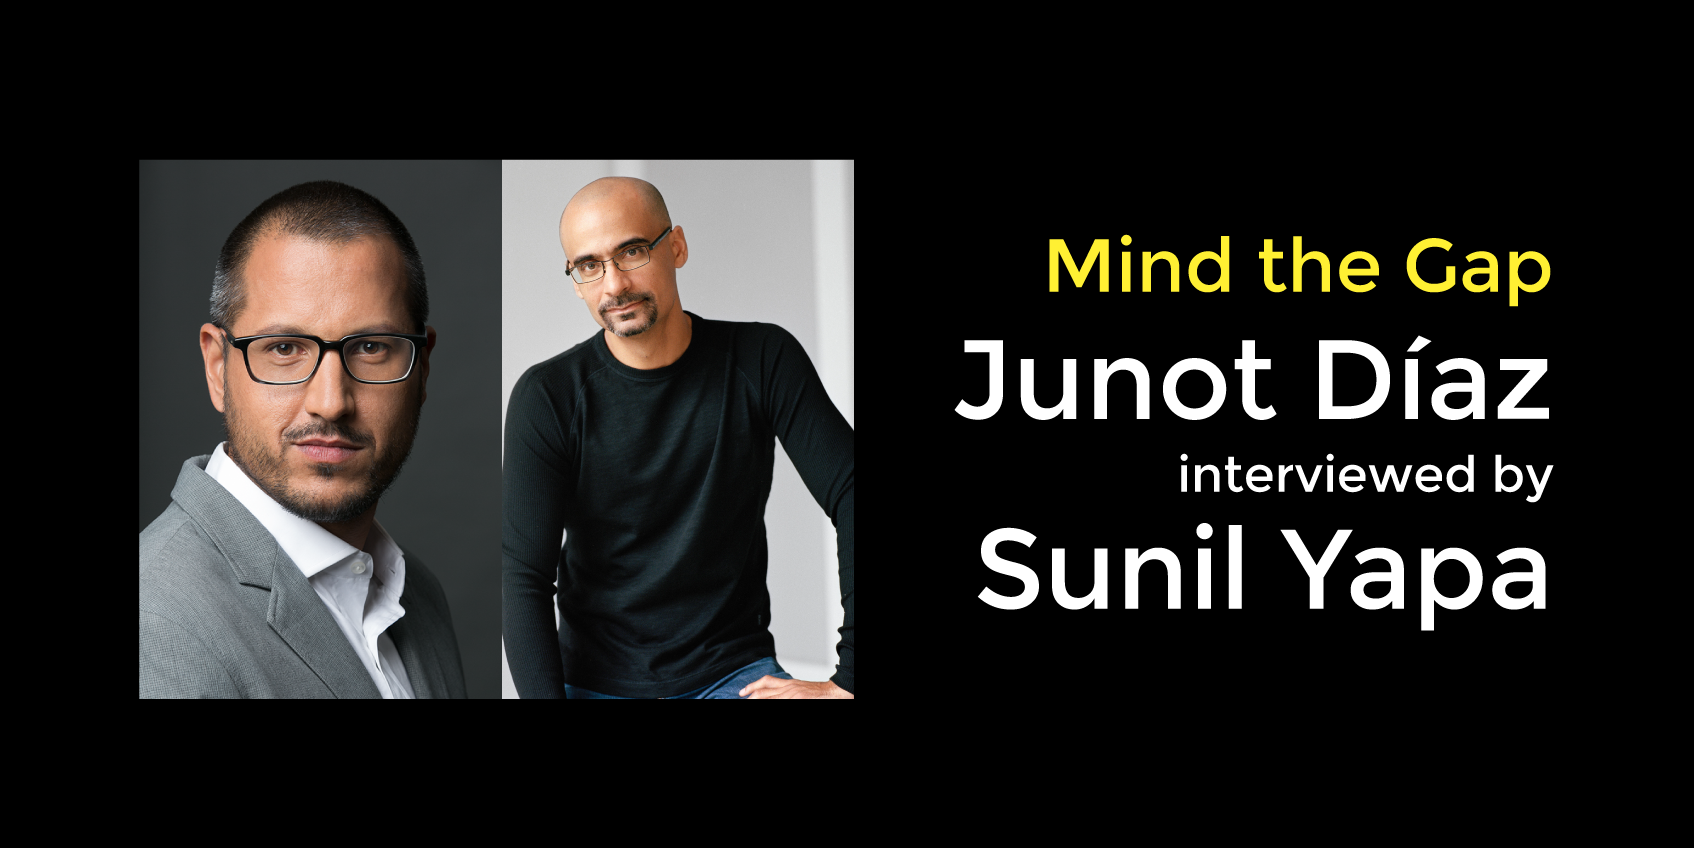 Ideas in Dialogue 2016: Junot Díaz and Sunil Yapa